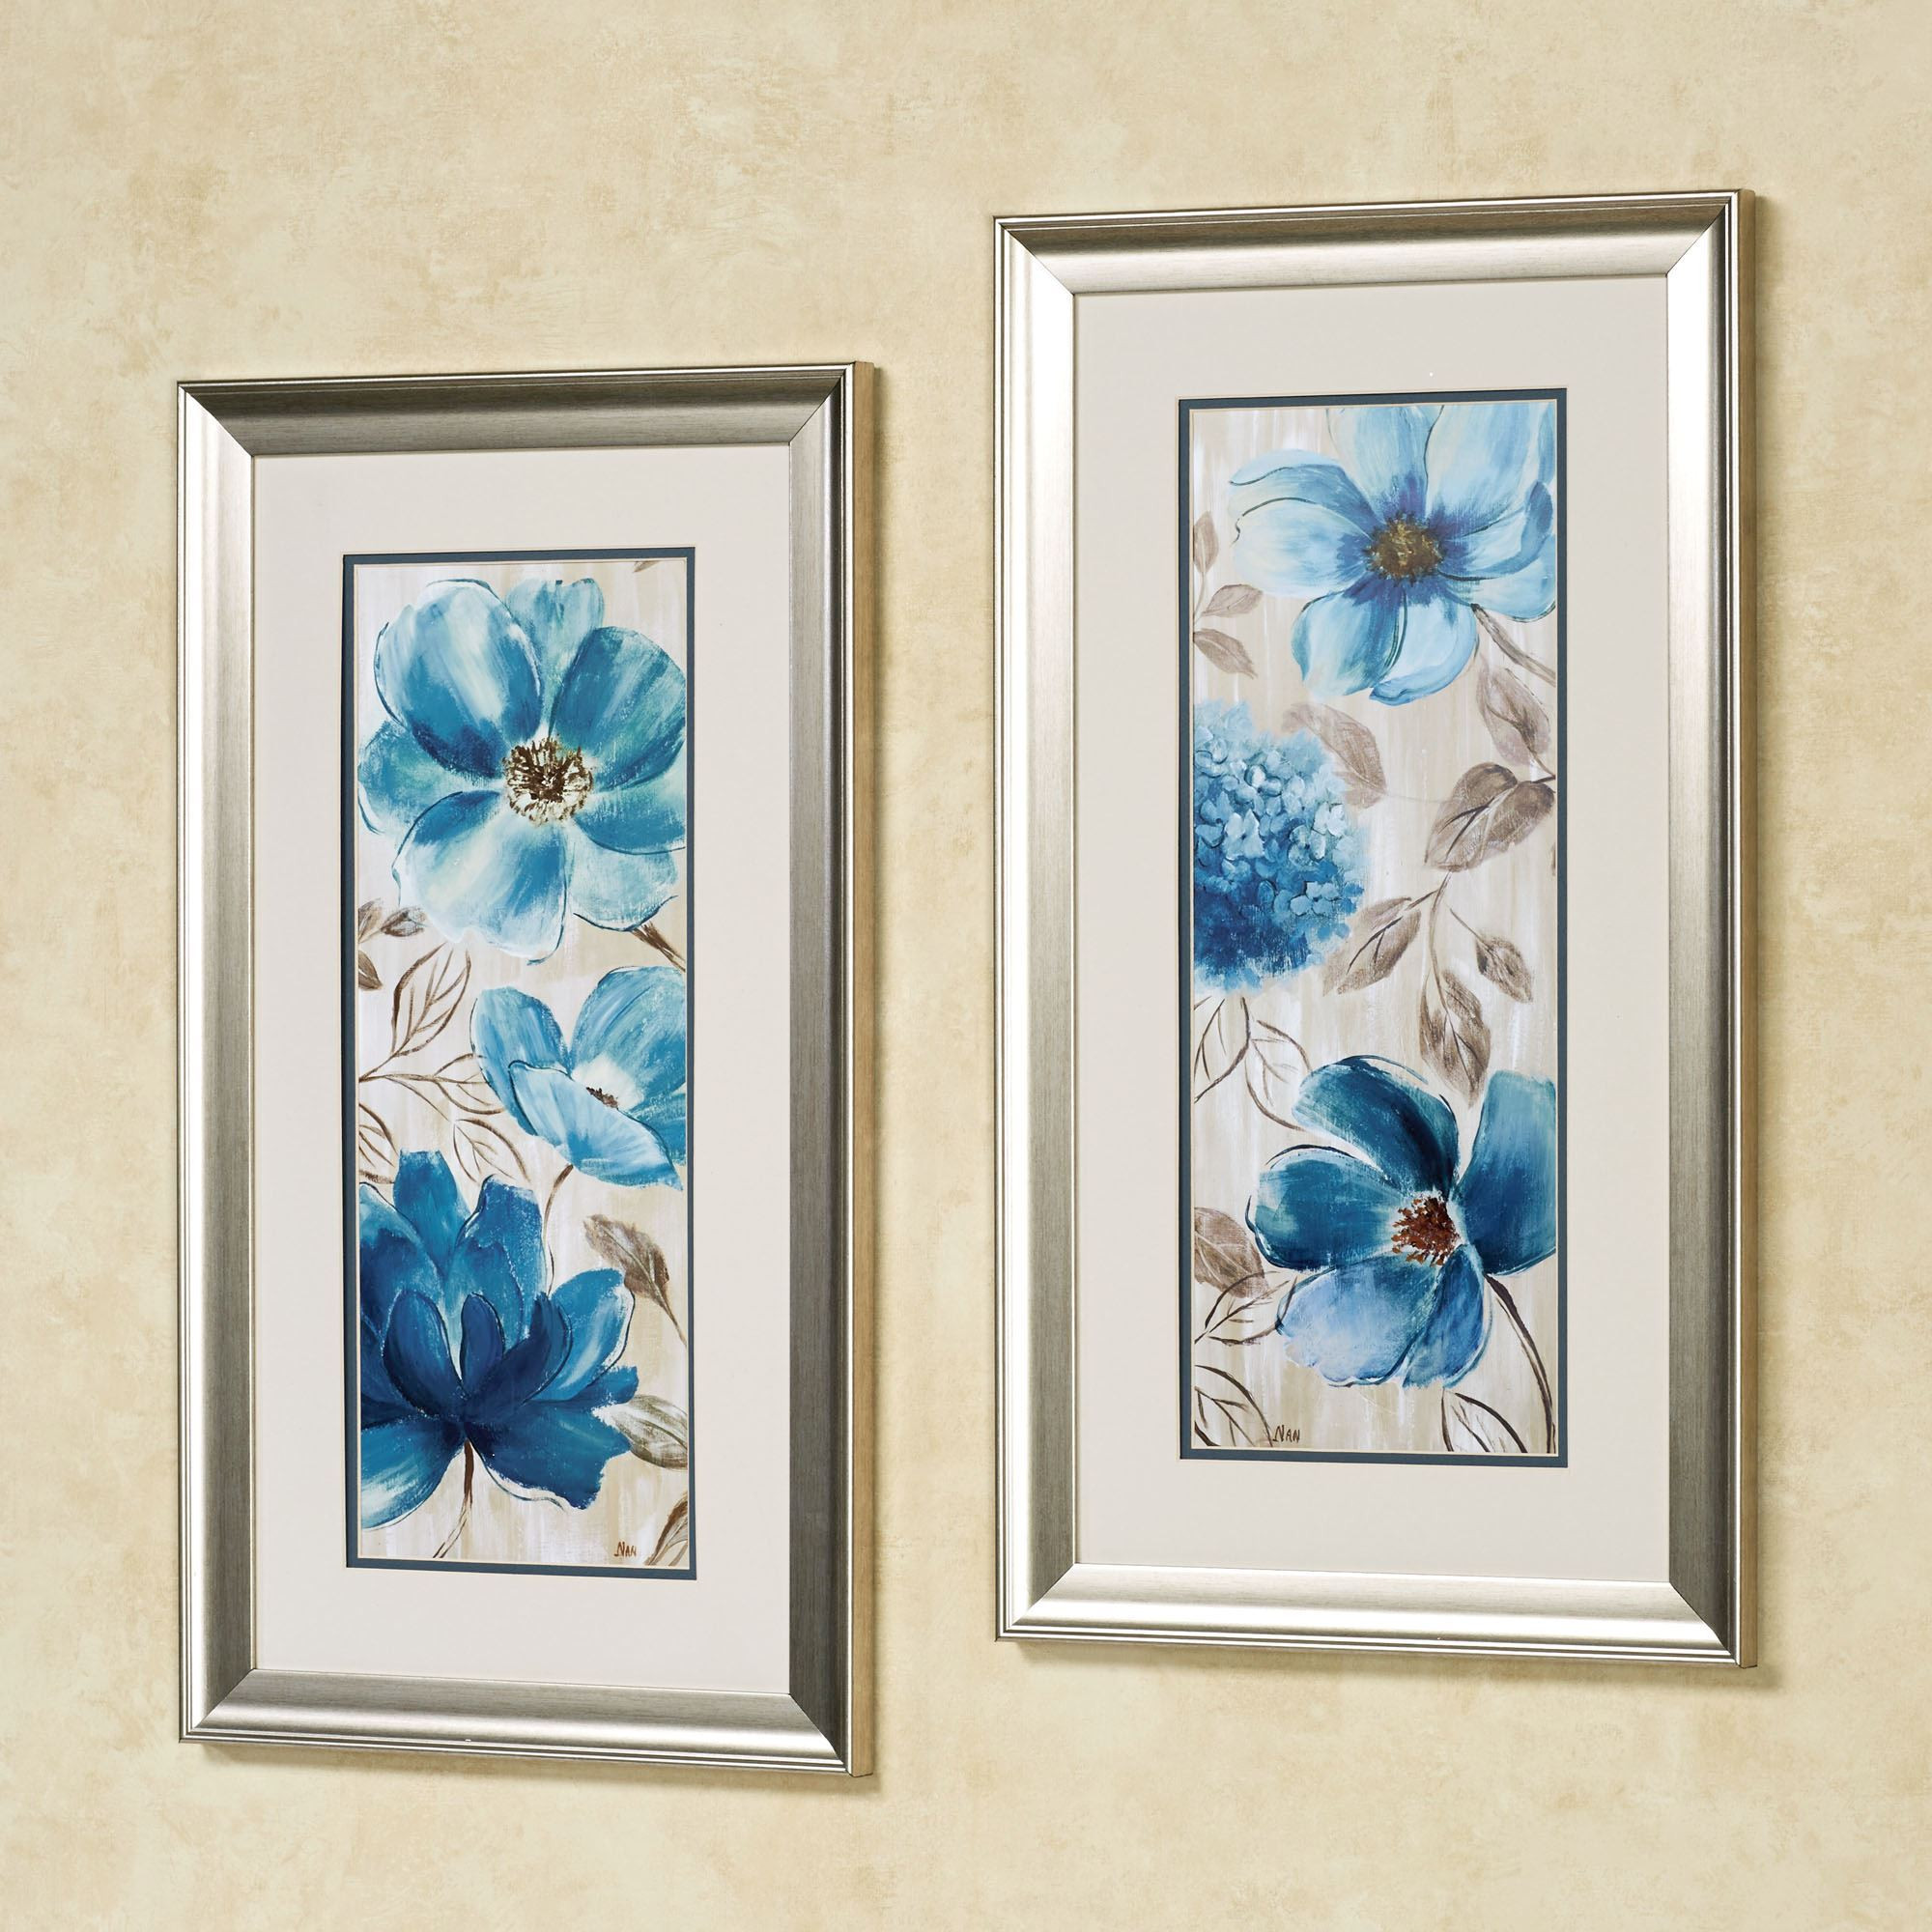 Best ideas about Blue Wall Art
. Save or Pin Blue Garden Floral Framed Wall Art Set Now.